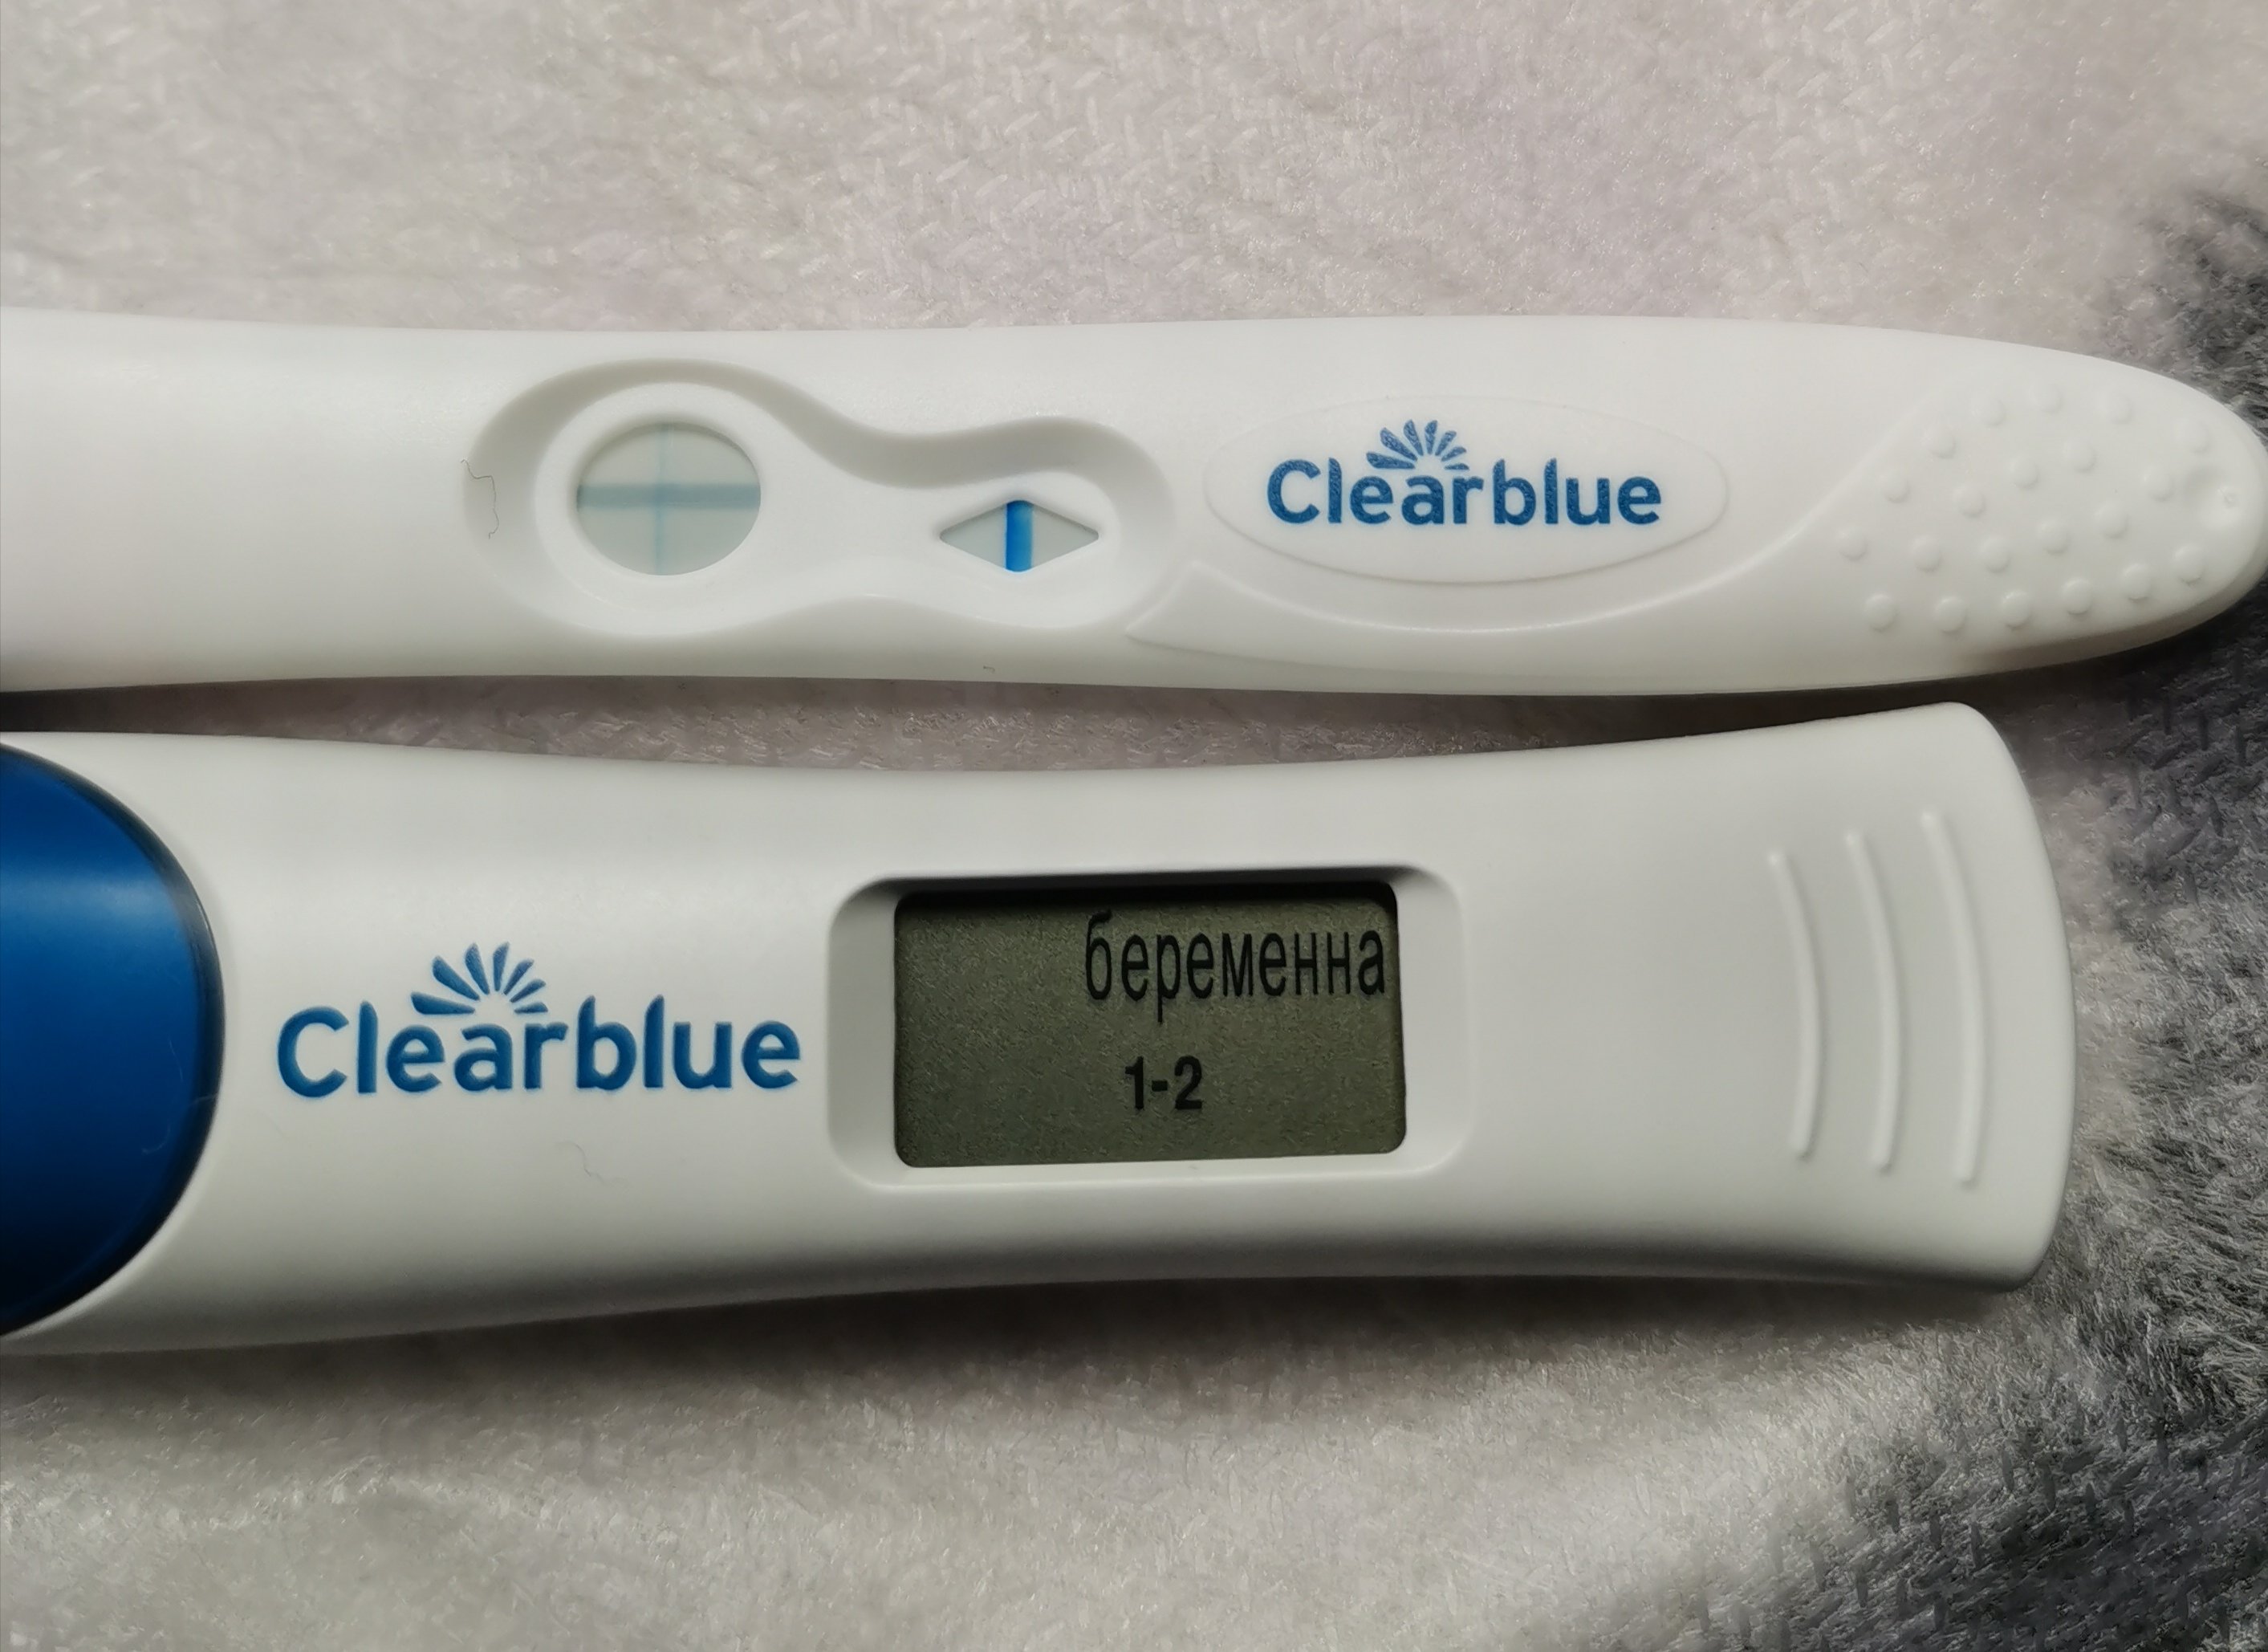 Тест на беременность 1 10. 9 ДПО Клиа Блю. Электронный тест клеар Блю 11 ДПО. Клеа Блю плюс 10 ДПО. Тест Clearblue 10 ДПО.